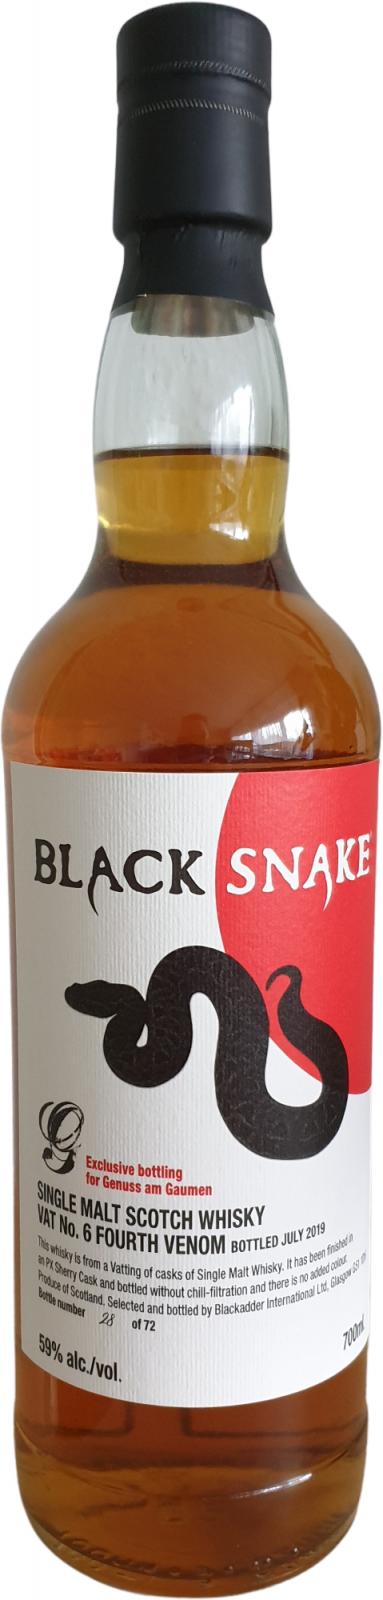 Black Snake 4th Venom BA VAT No. 6 Genuss am Gaumen 59% 700ml